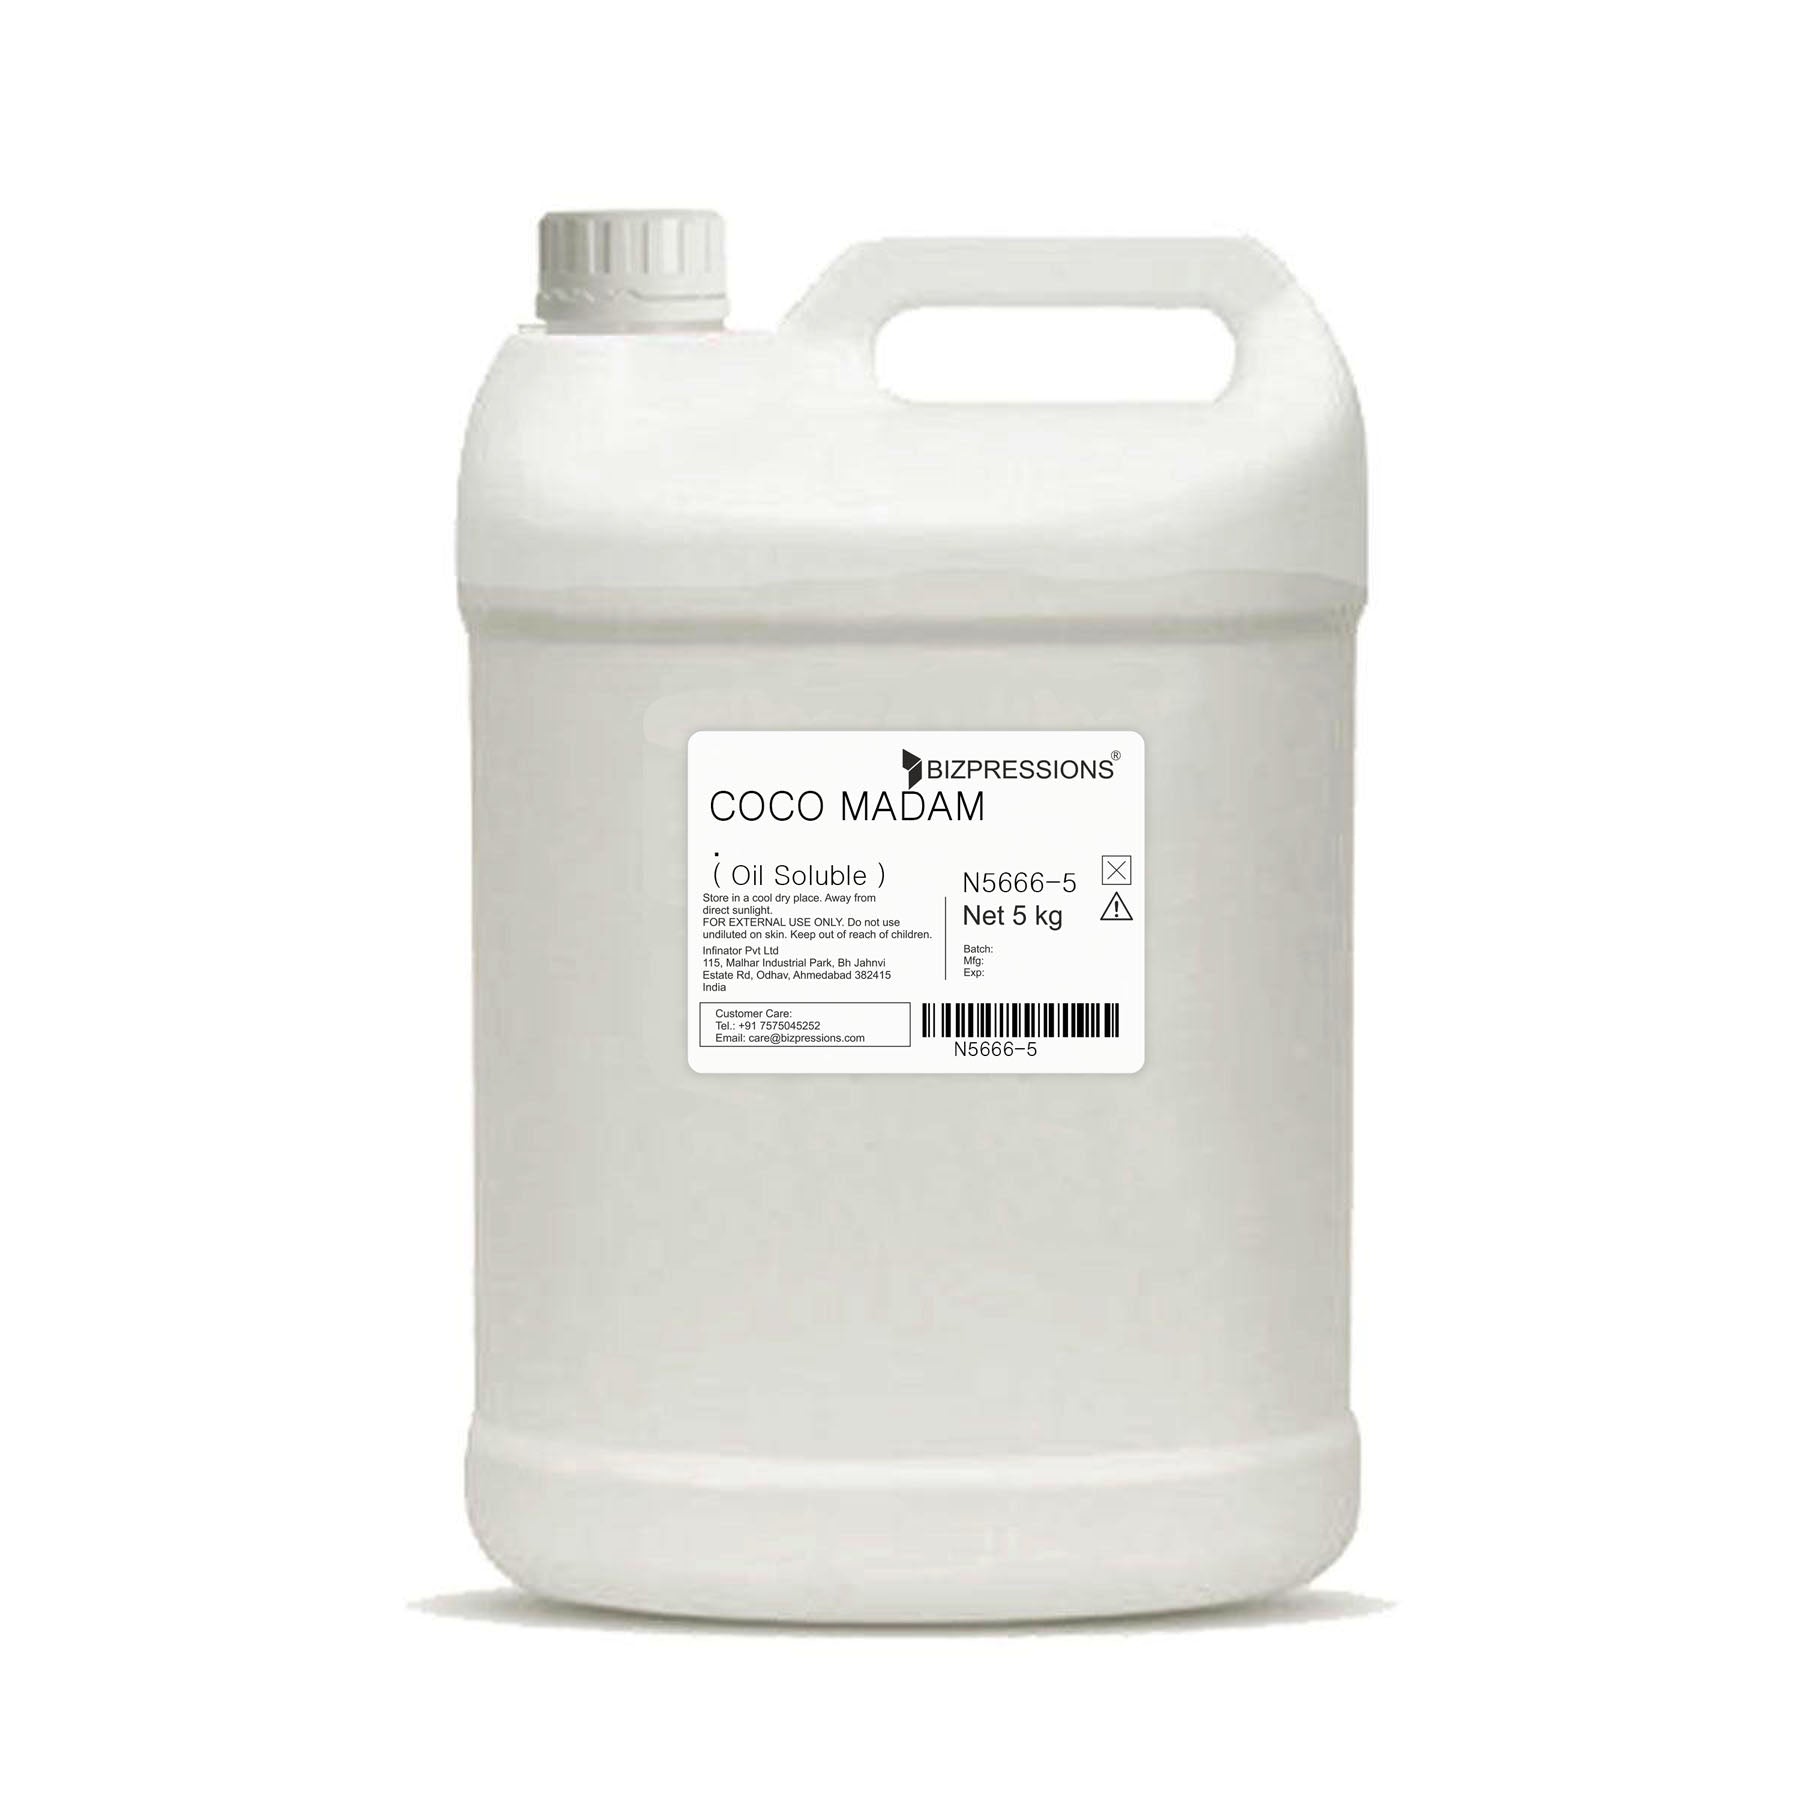 COCO MADAM - Fragrance ( Oil Soluble ) - 5 kg